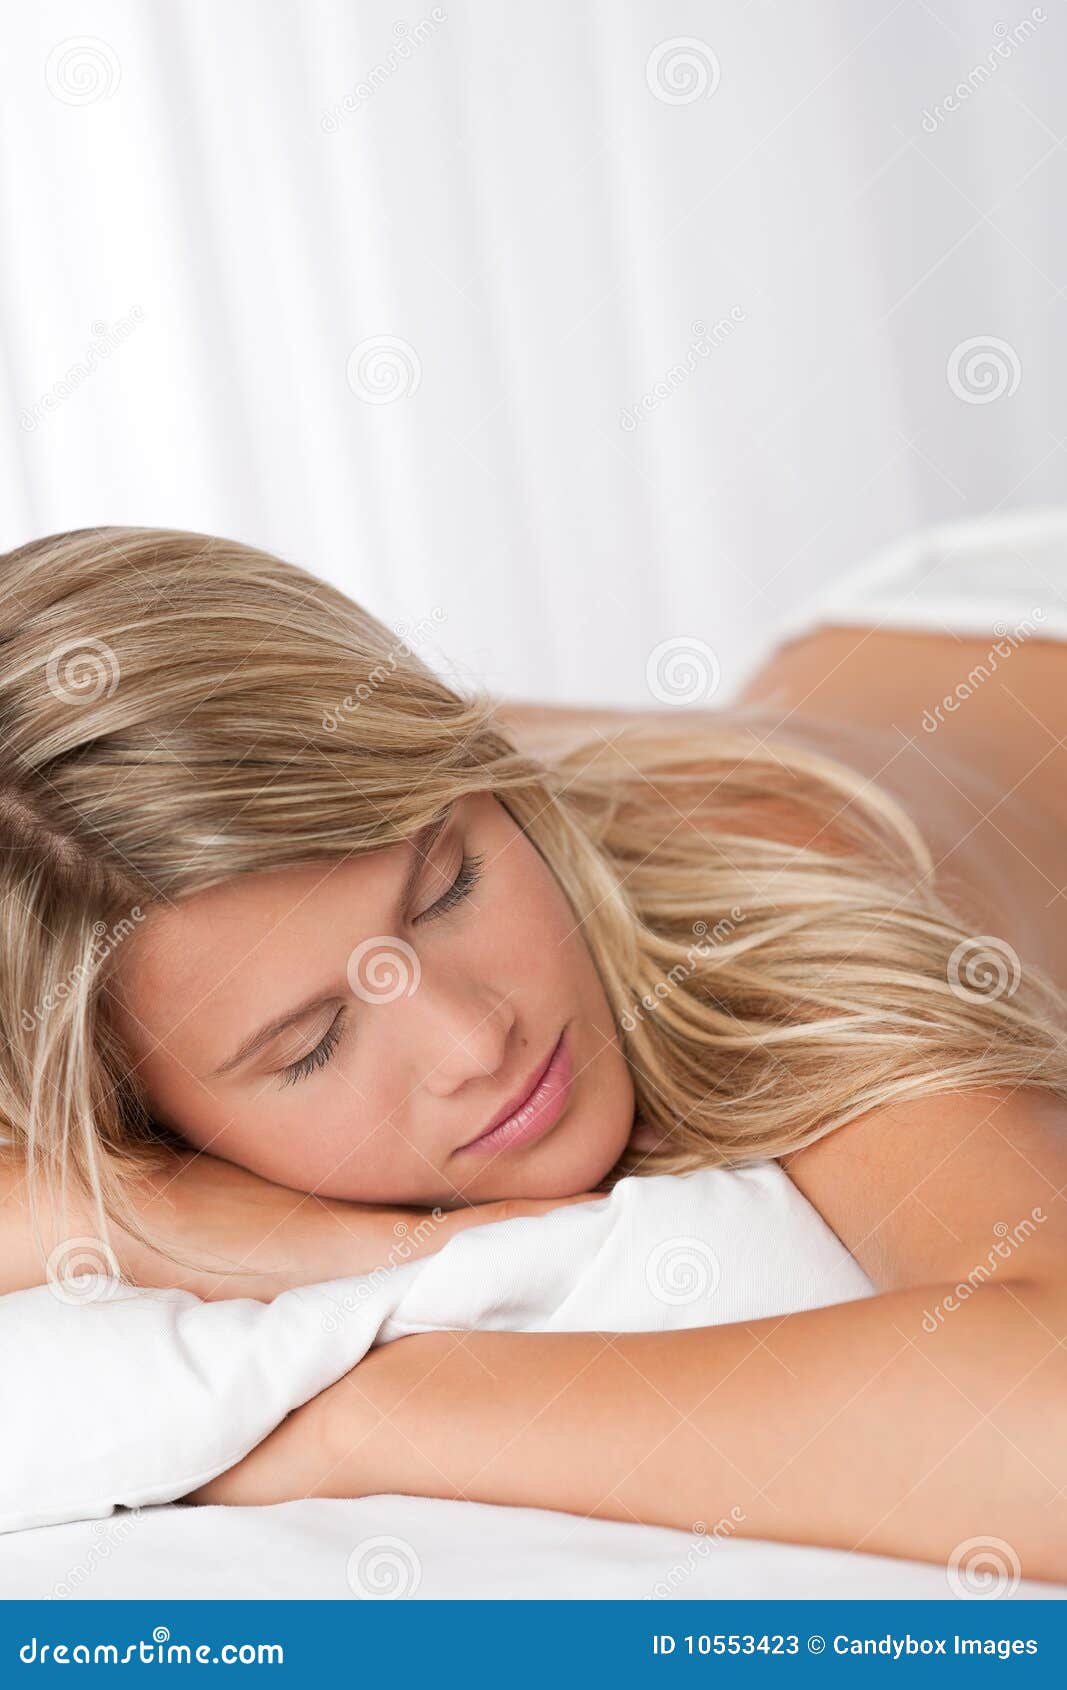 sleeping sex video mom